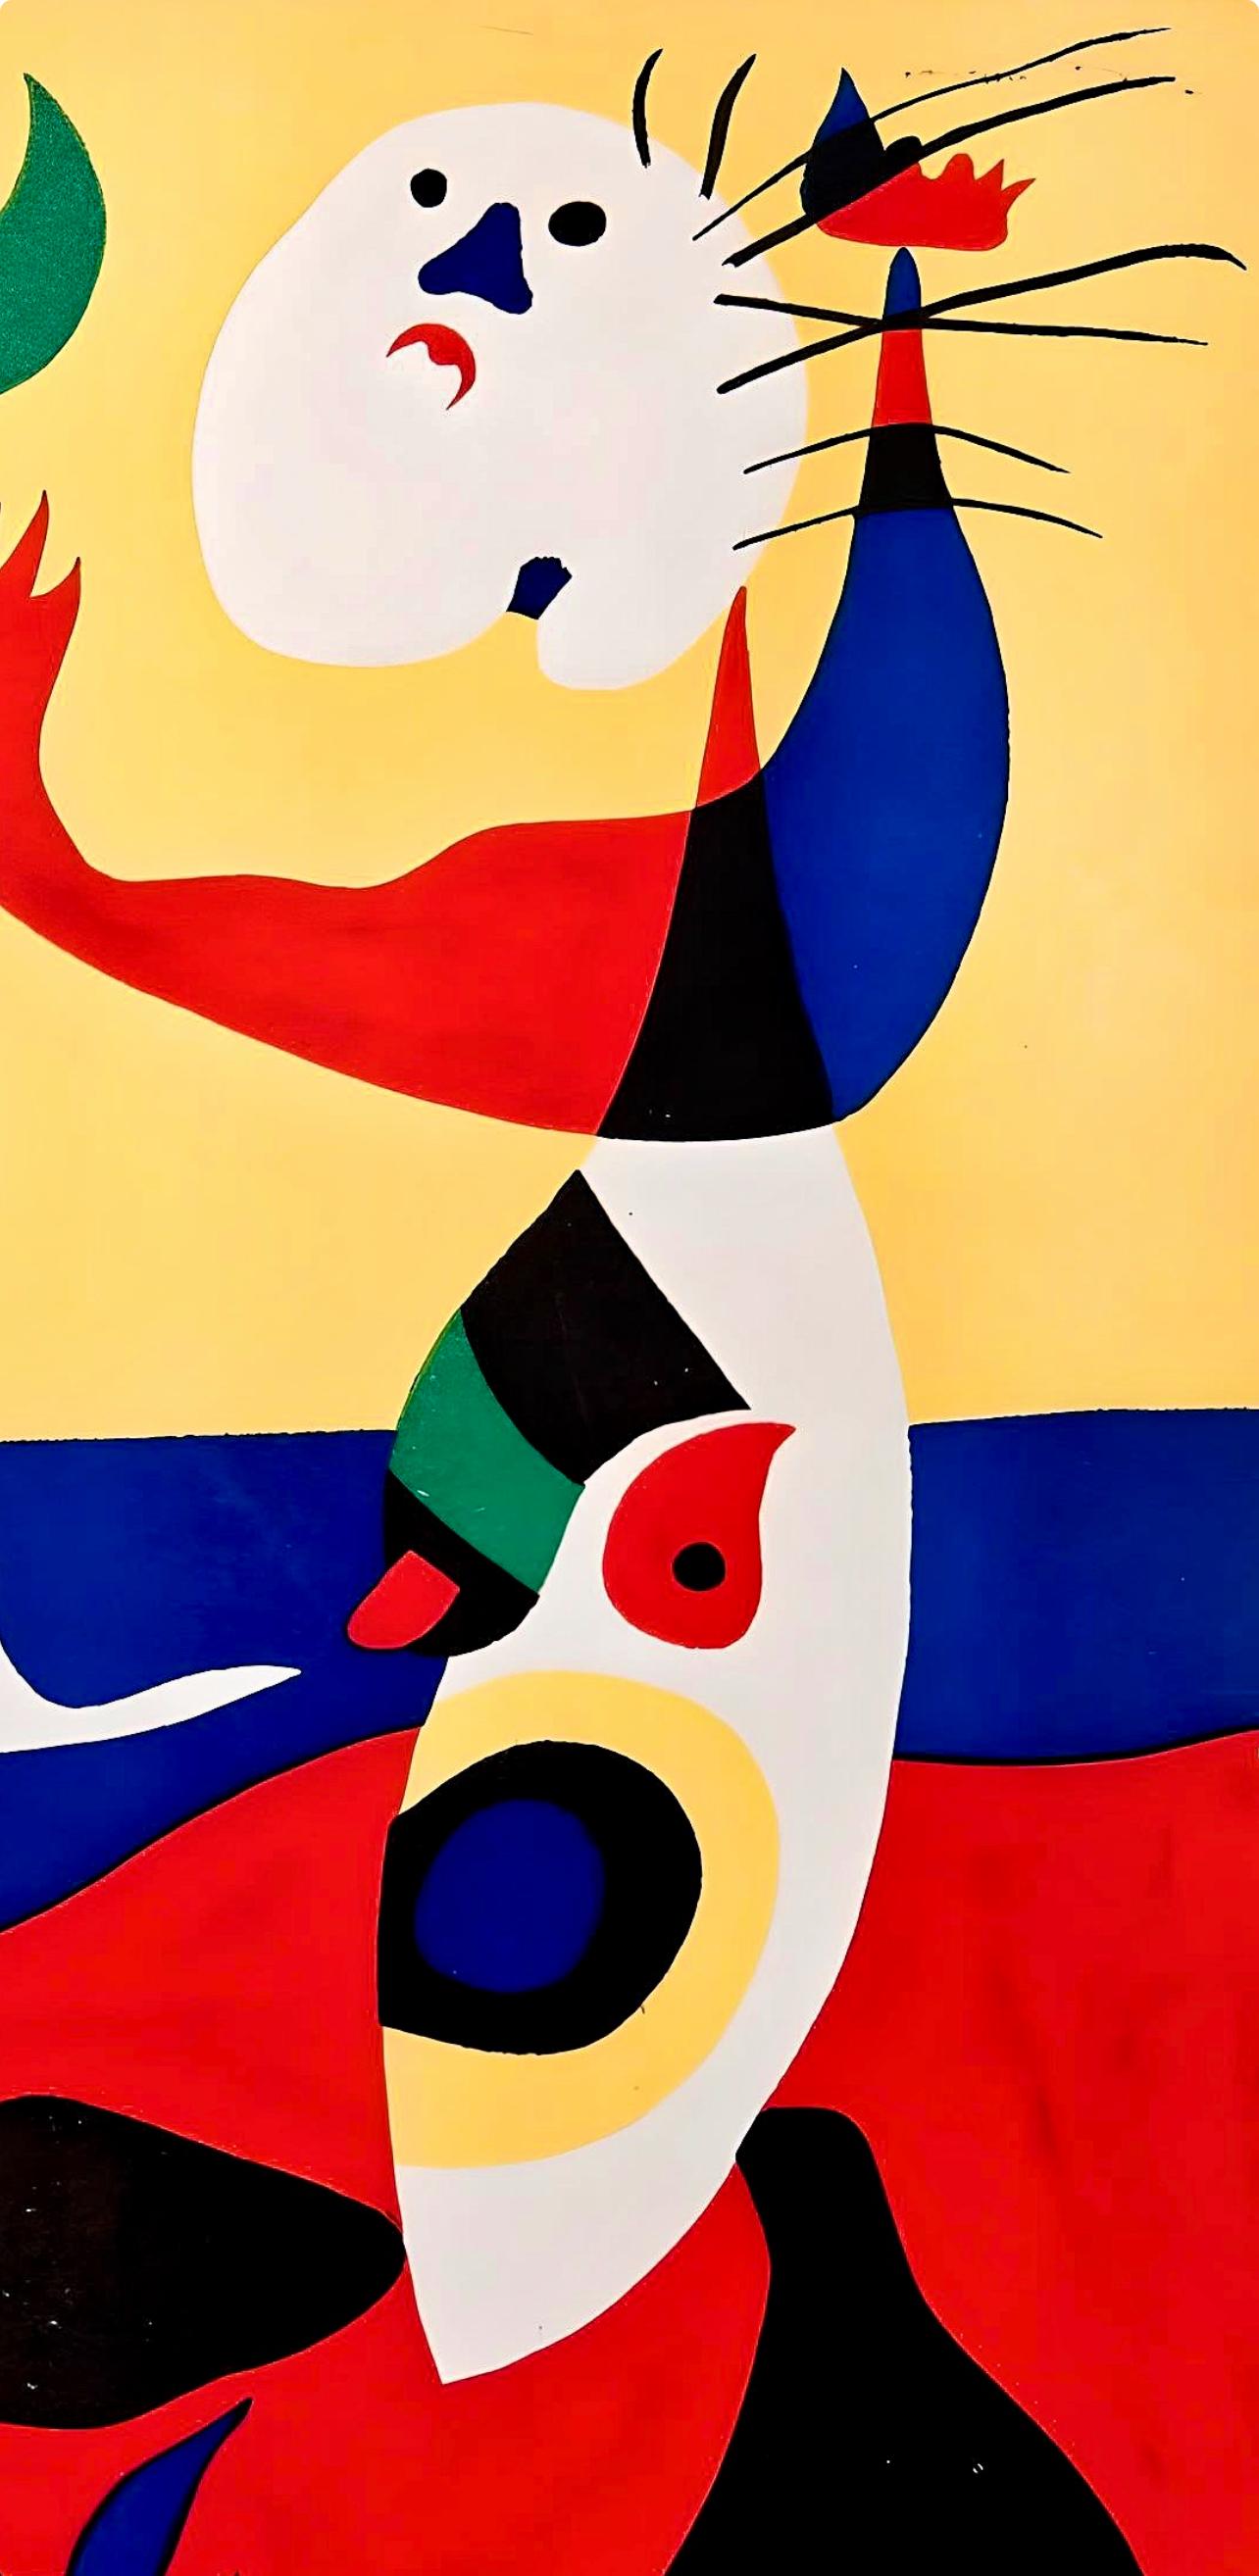 Miró, L'Ete (Dupin 1310; Benhoura 396), Verve: Revue Artistique (after) - Print by Joan Miró